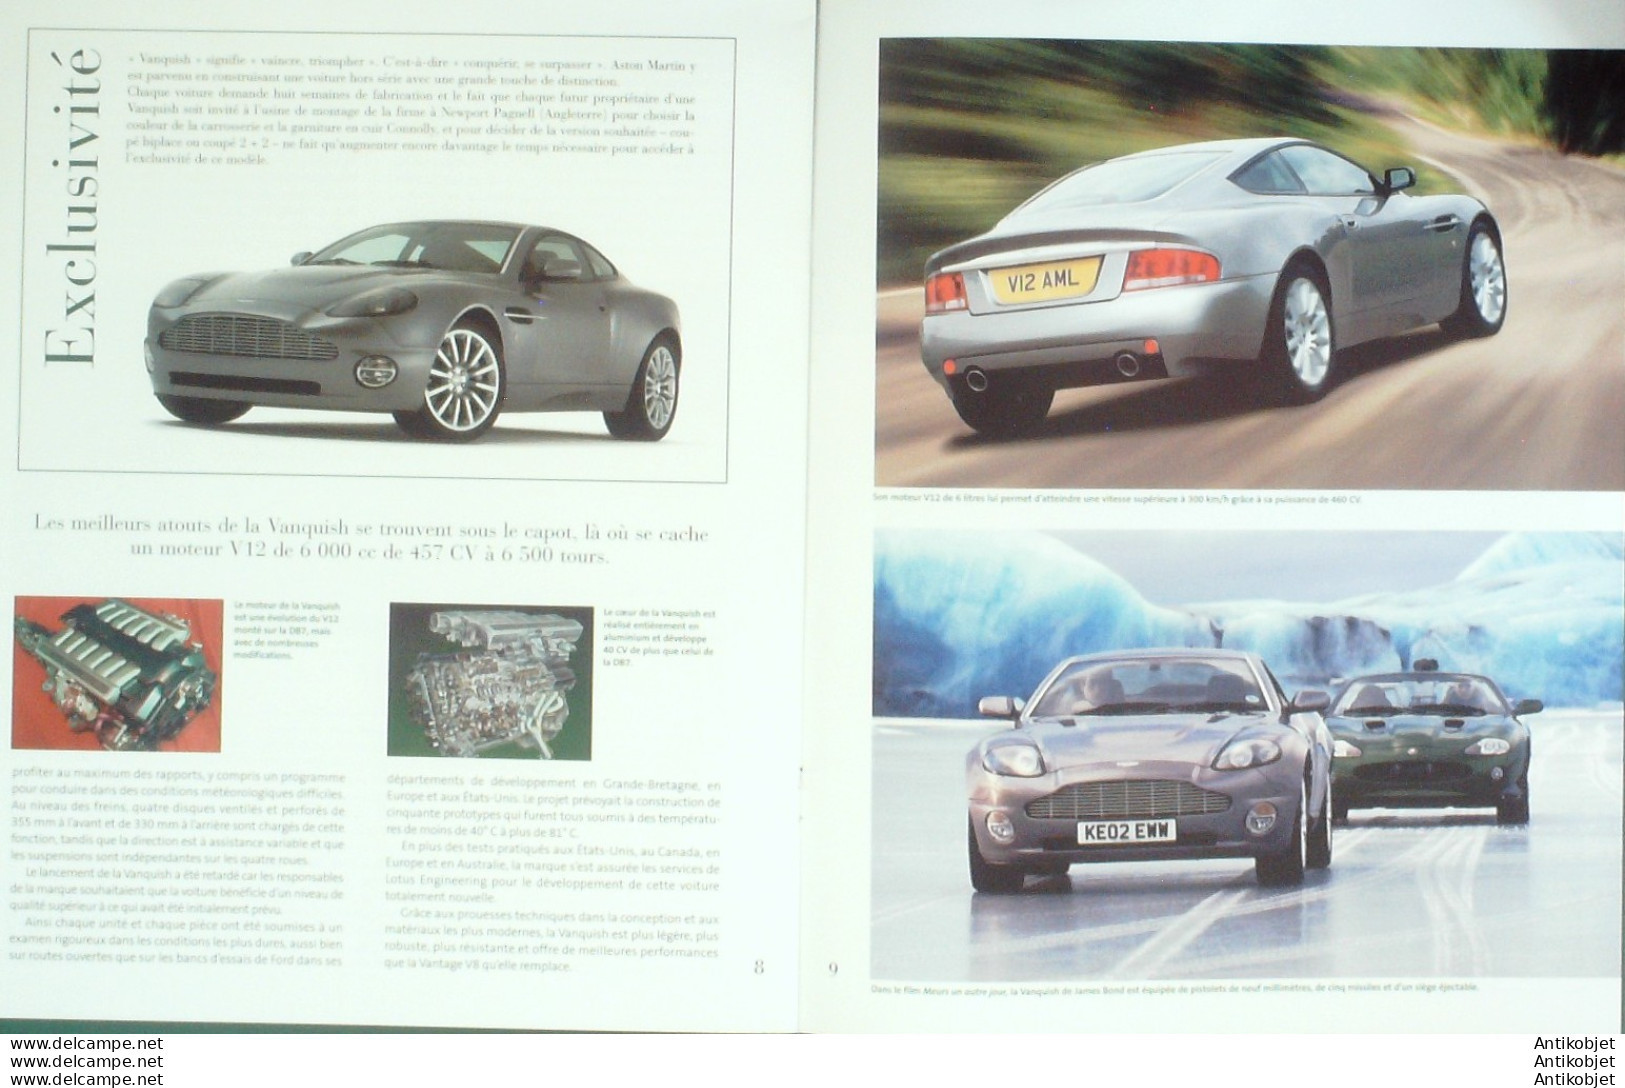 Voiture Aston Martin V12 édition Hachette - History